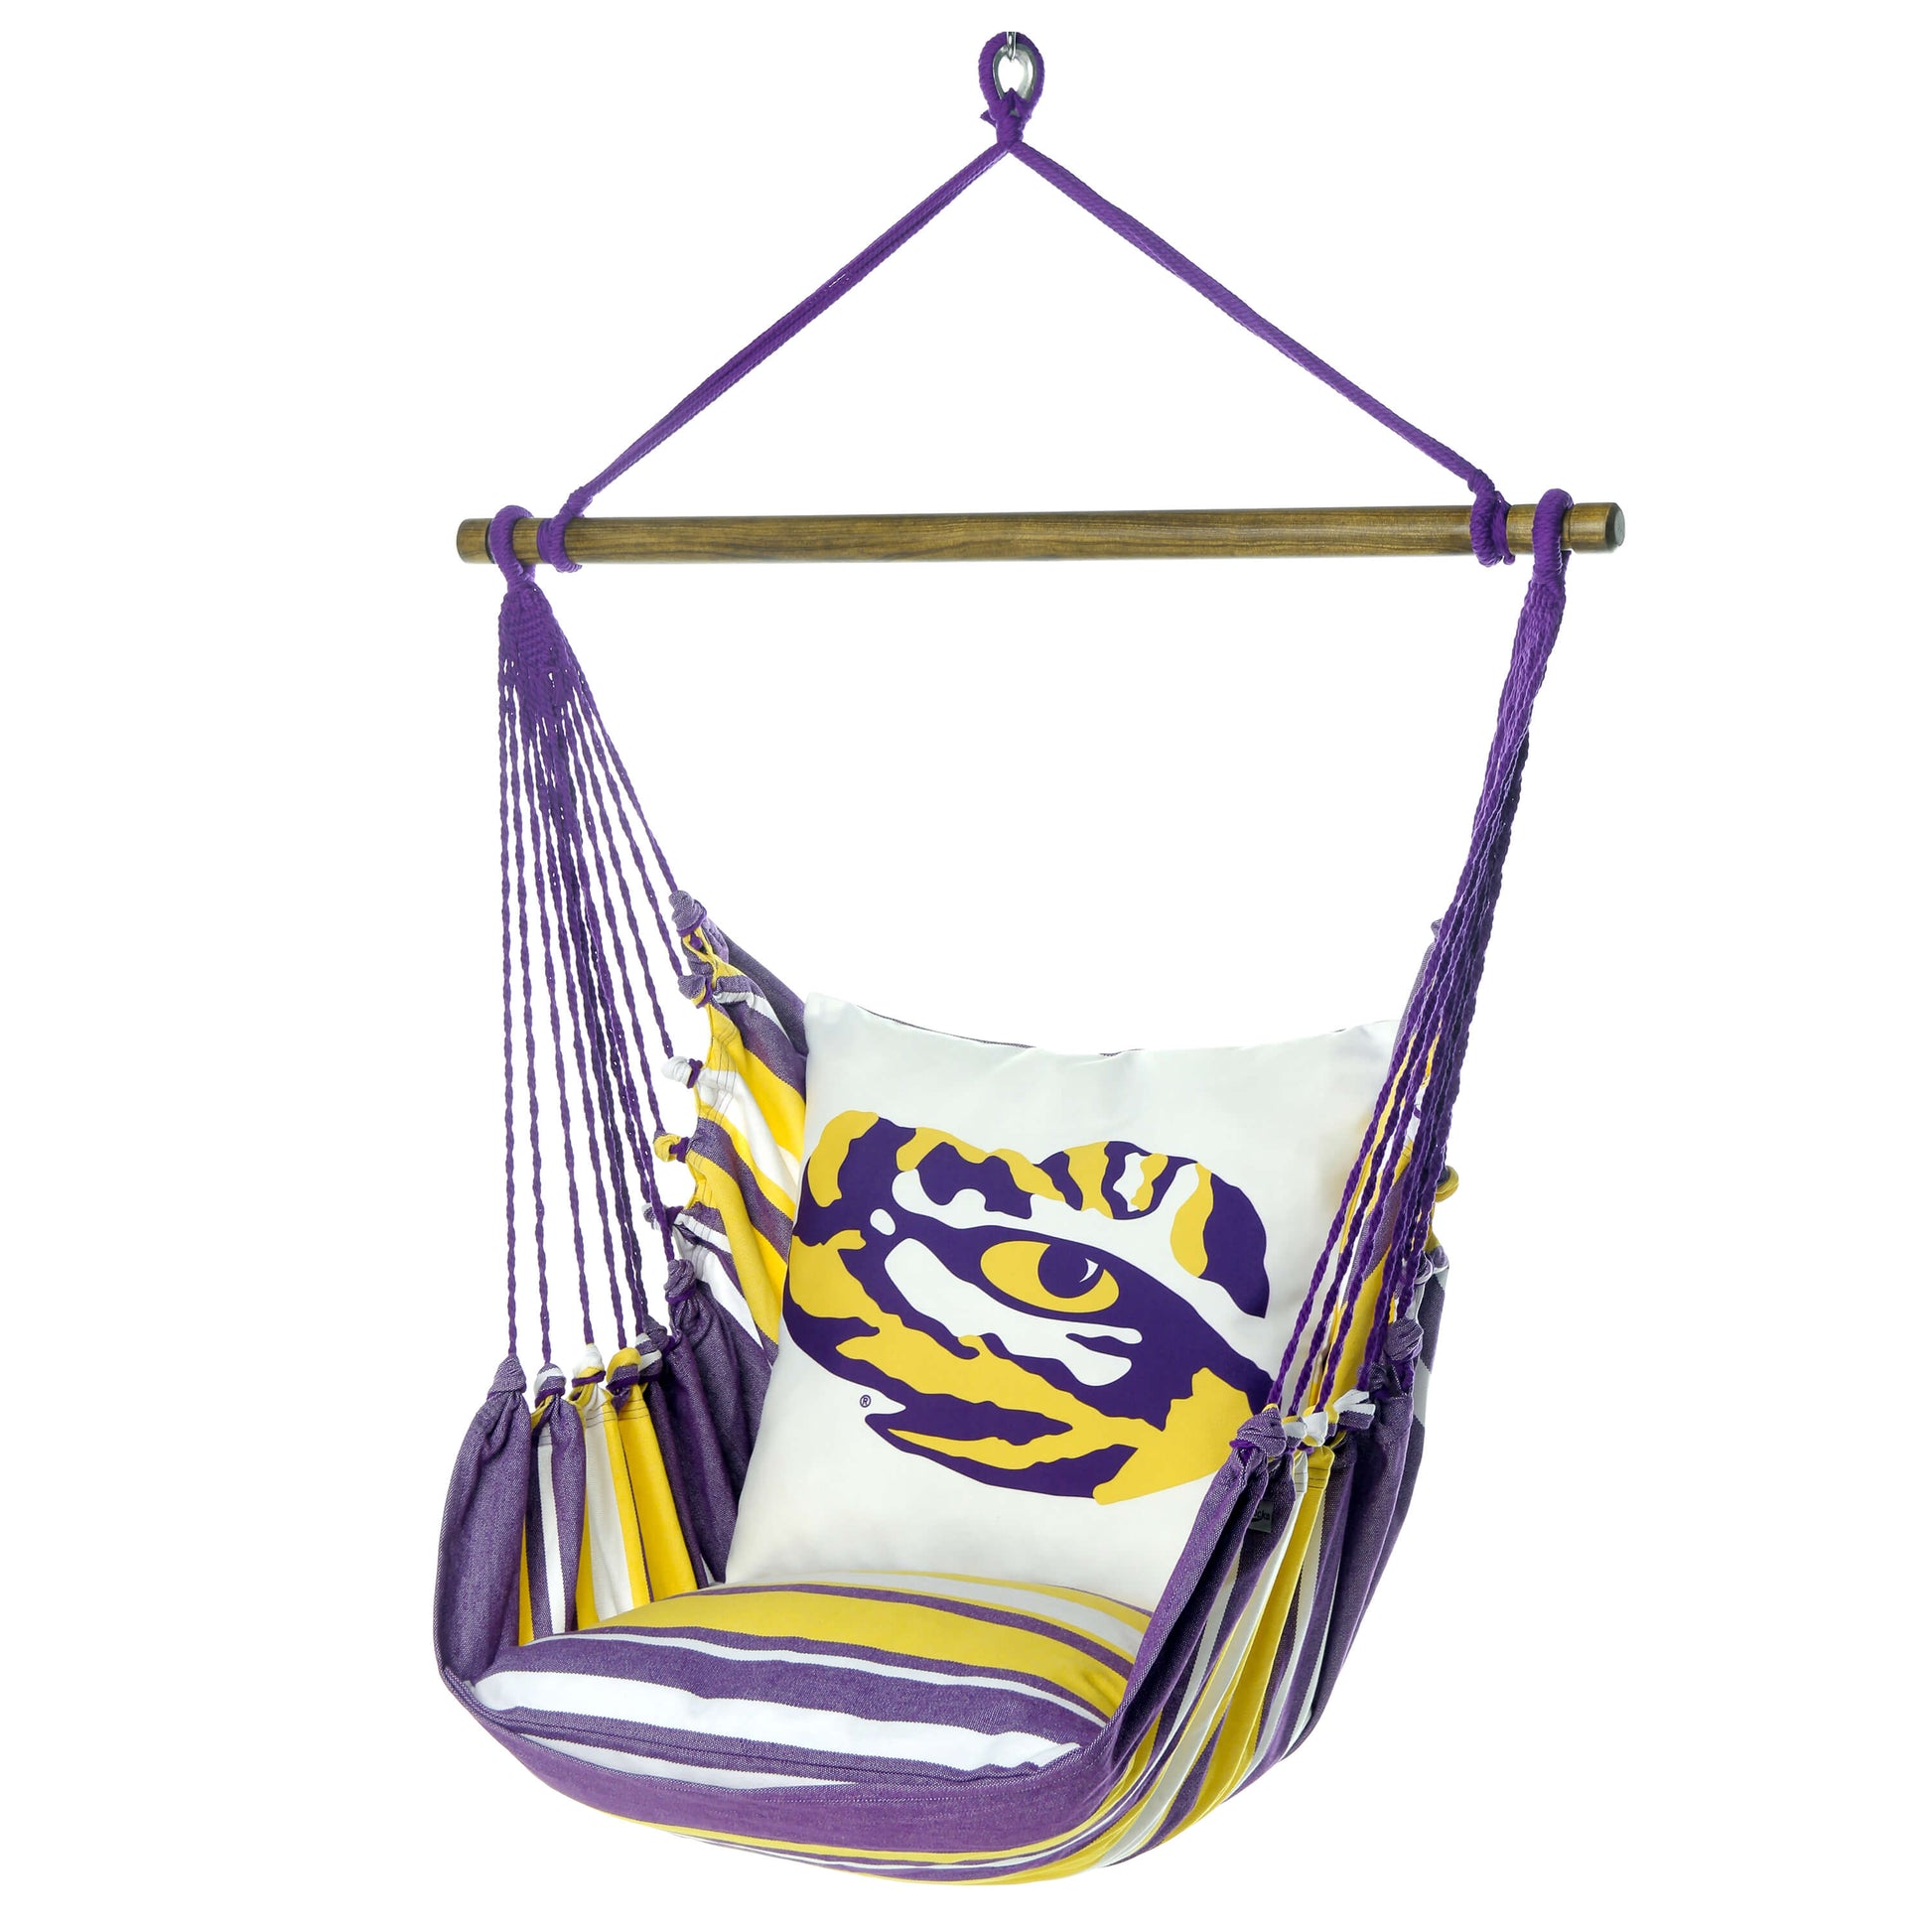 LSU Tigers Hanging Chair Swing